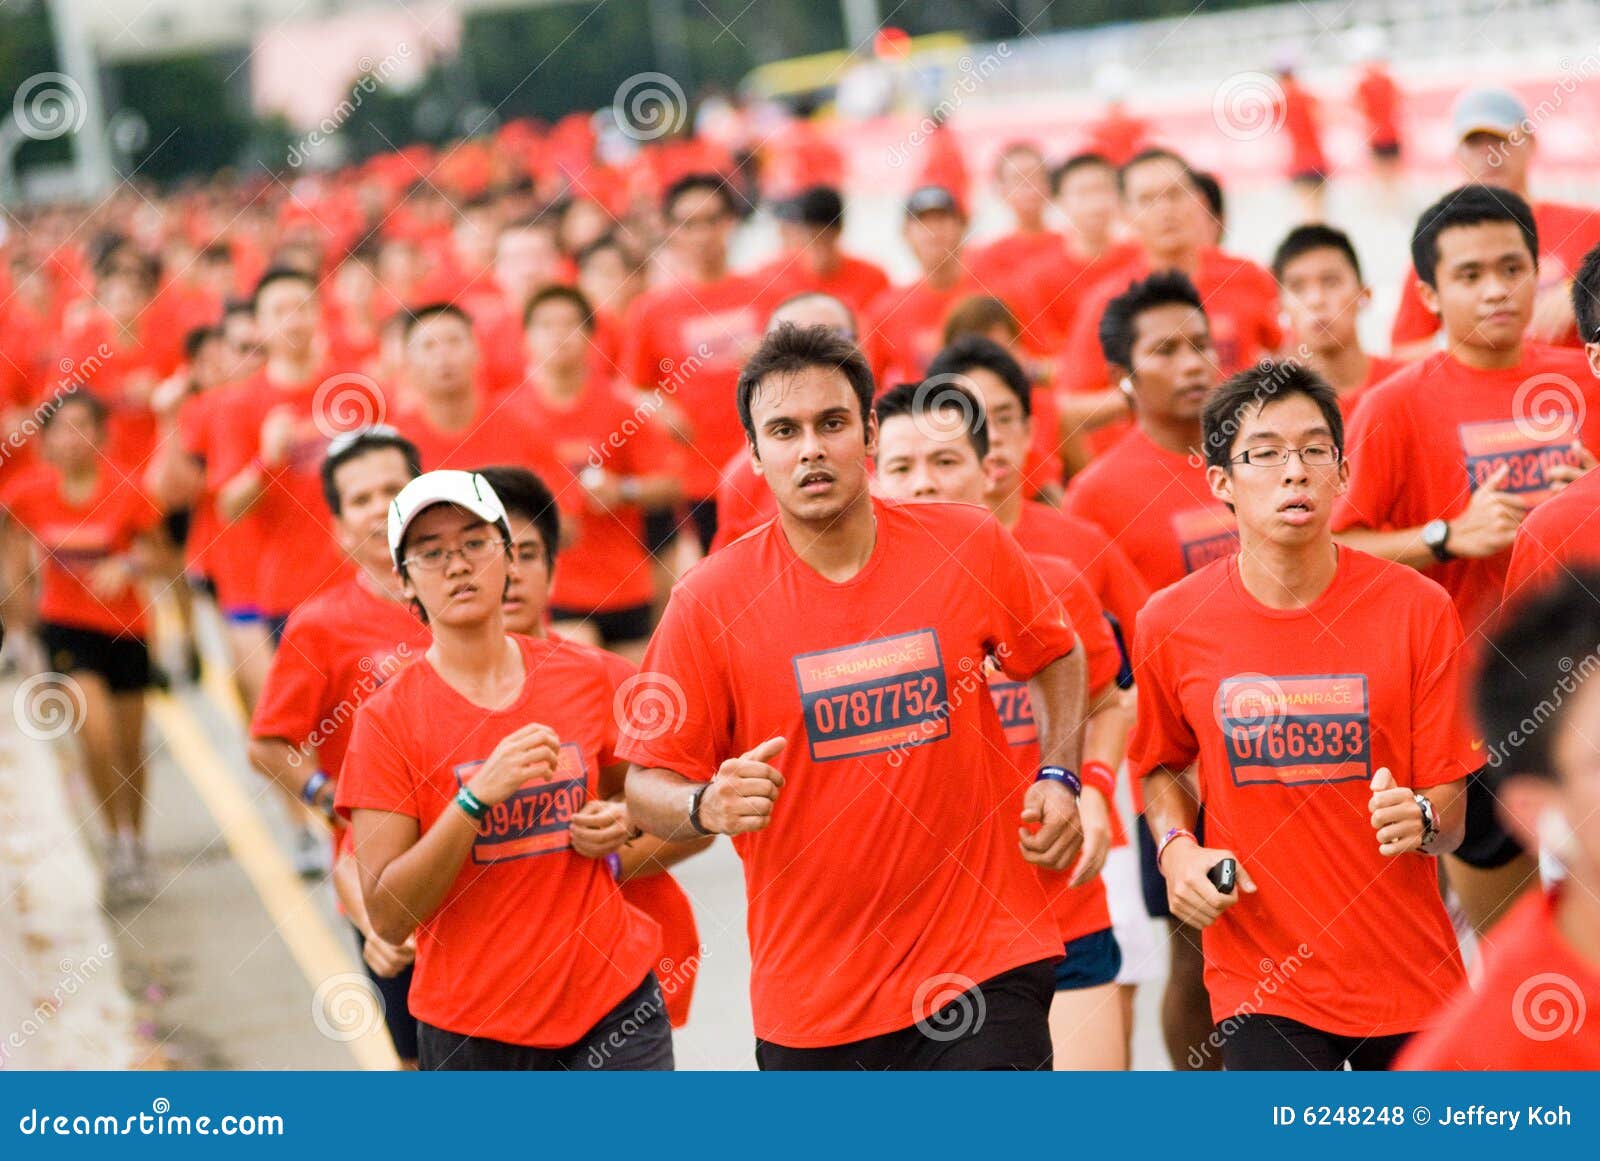 human race singapore